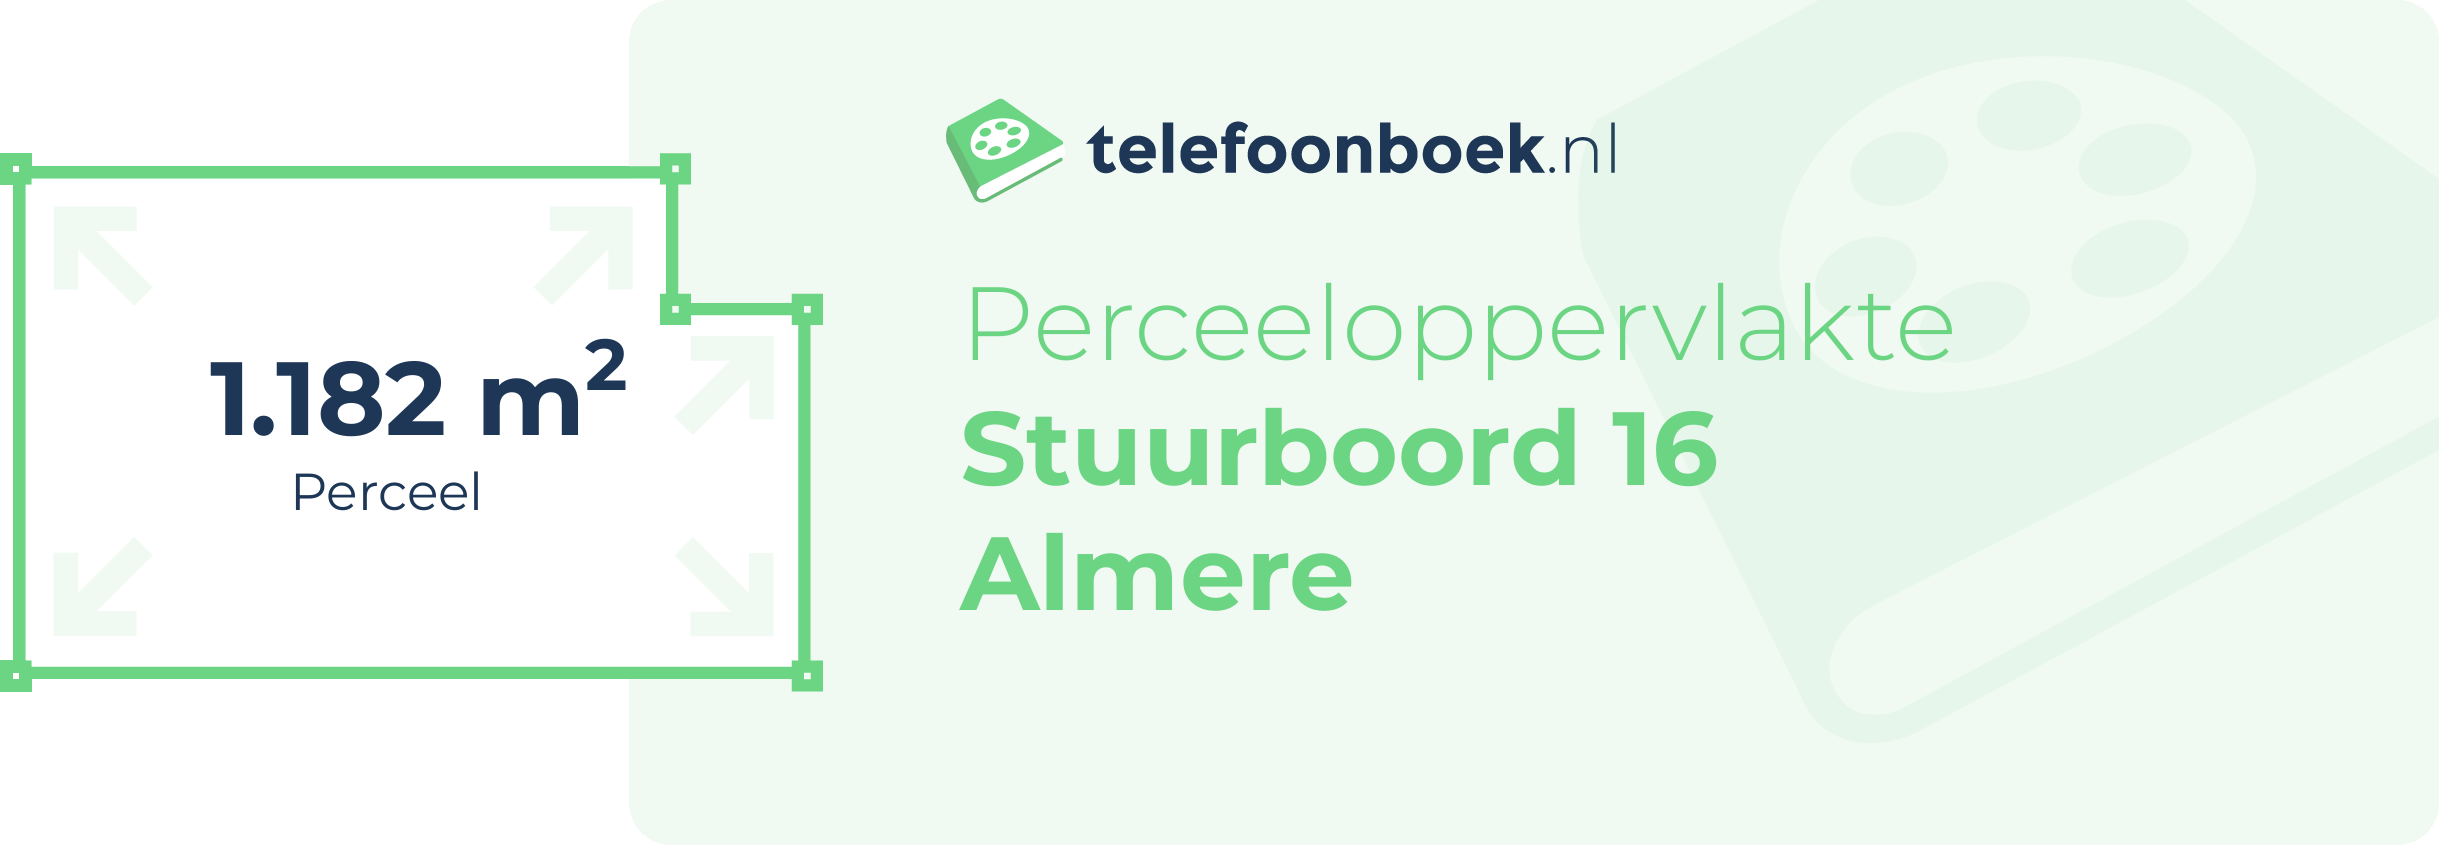 Perceeloppervlakte Stuurboord 16 Almere